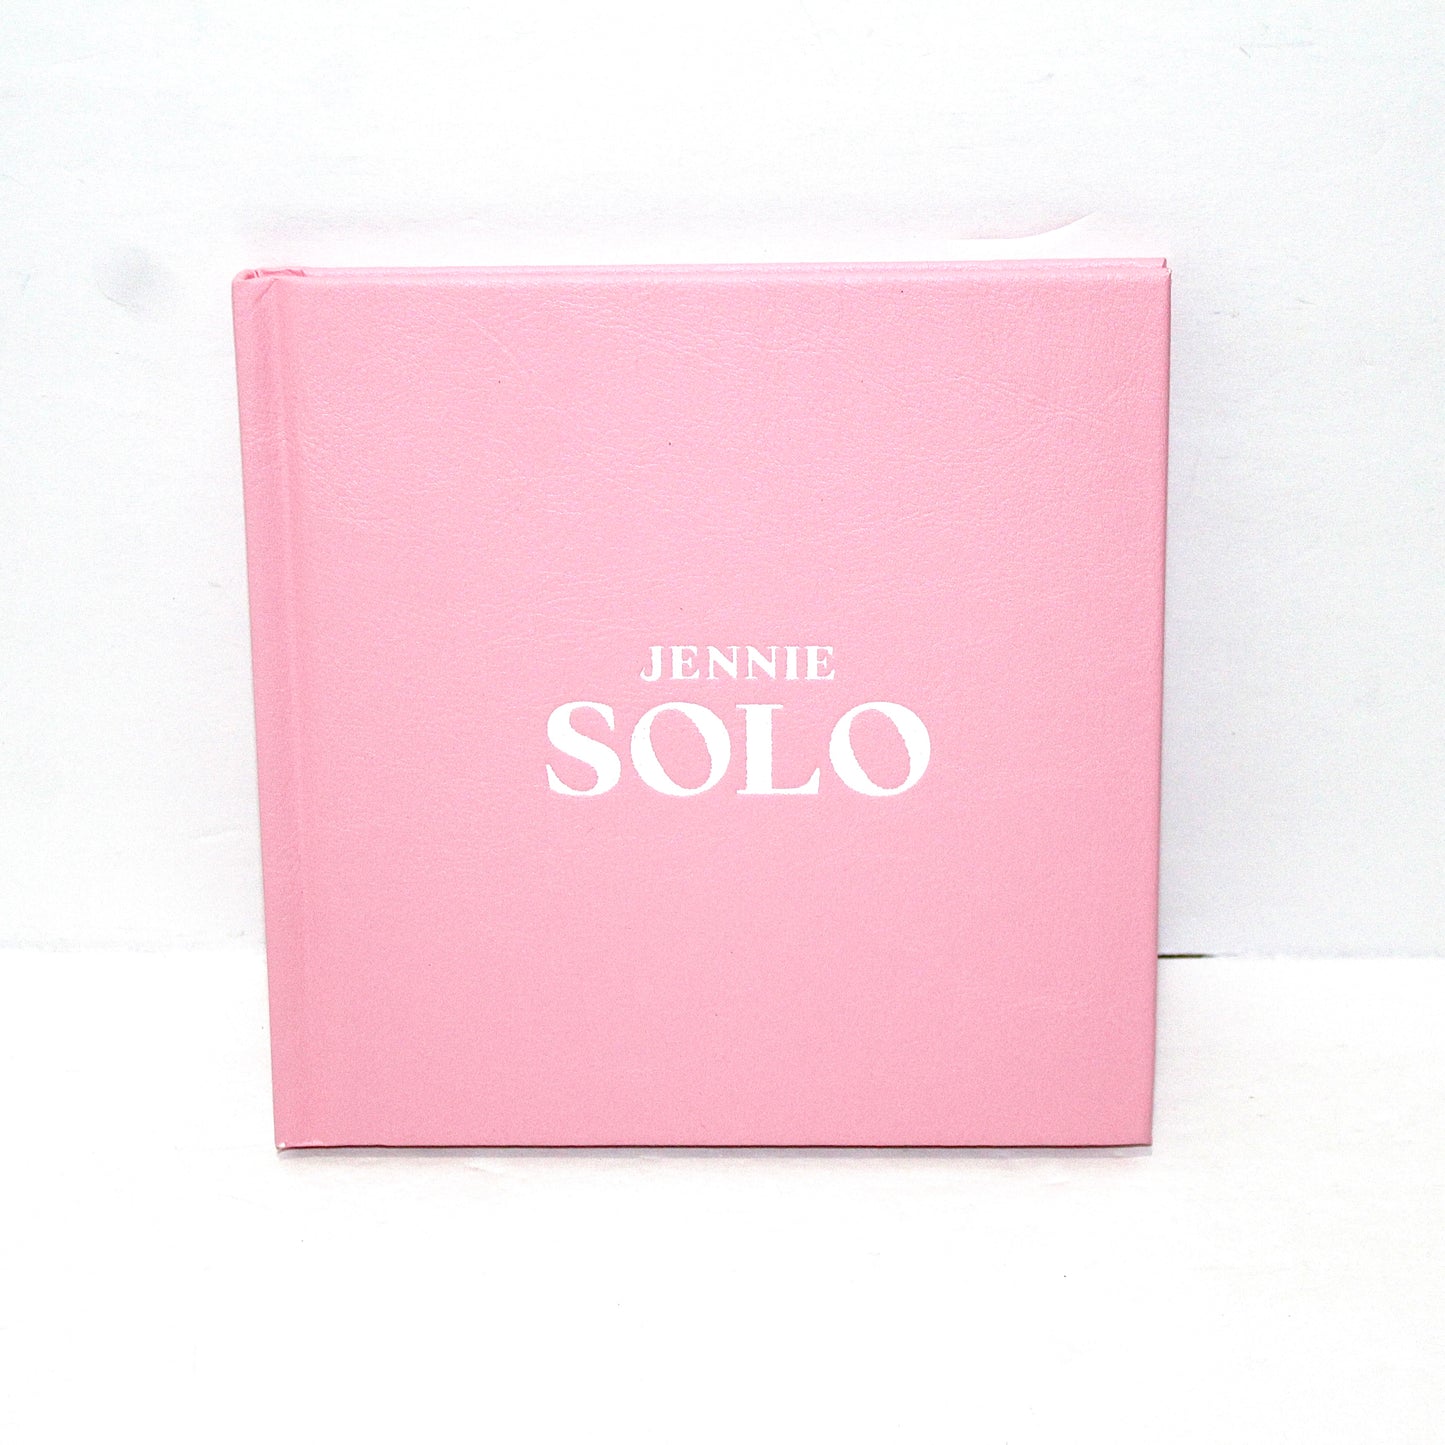 JENNIE 1st Single Album: Solo